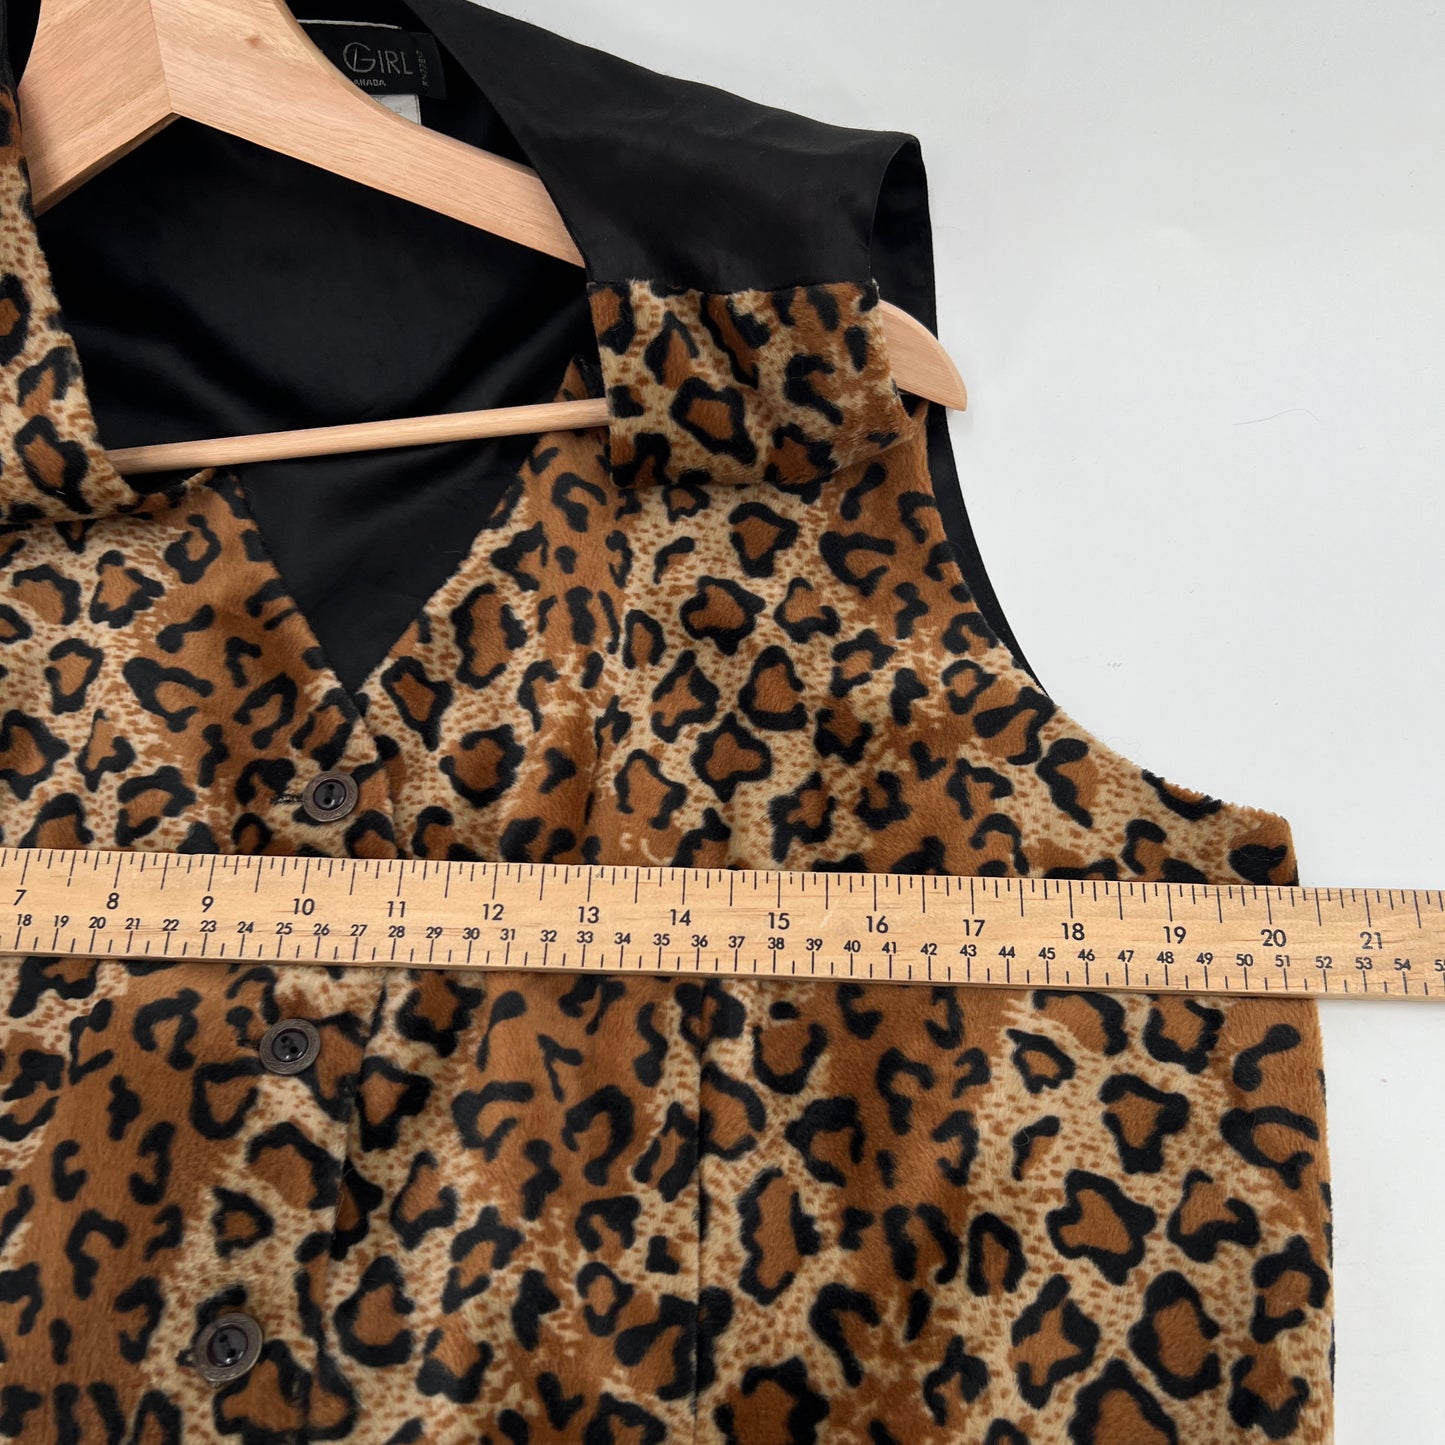 Vintage Tall Girl Cheetah Print Vest M